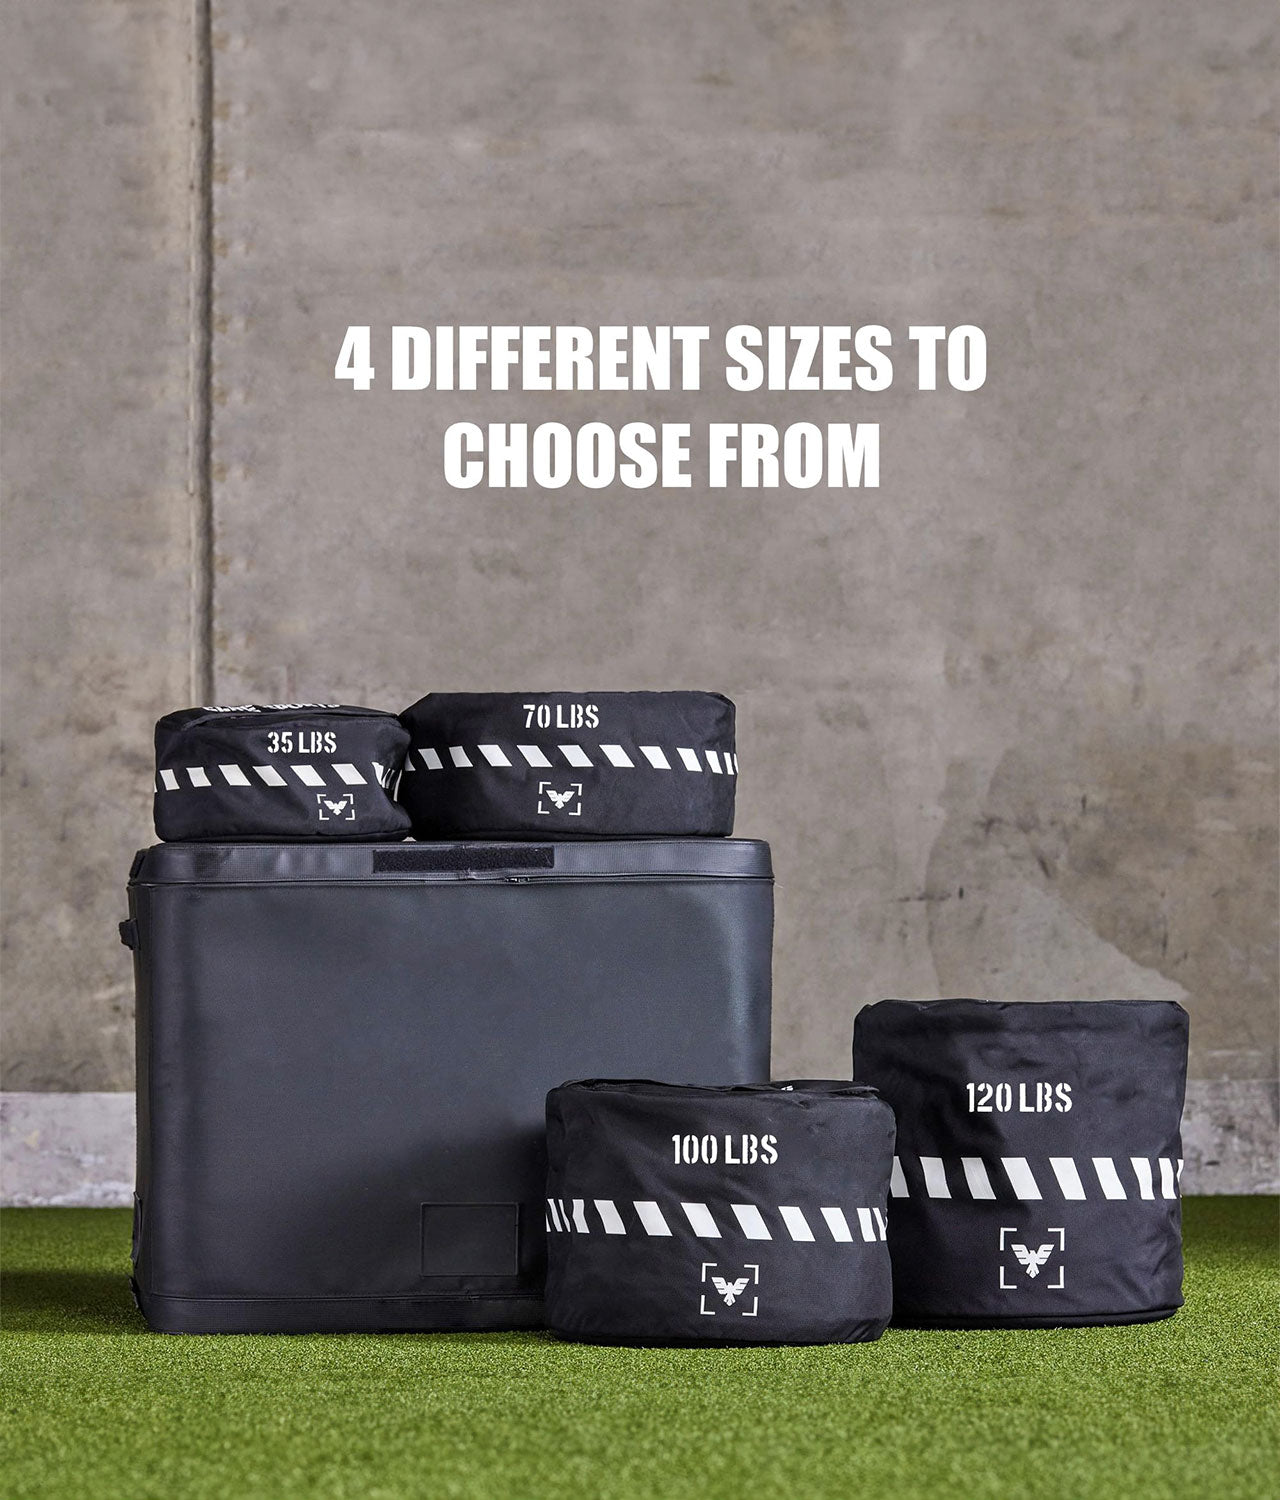 Elite Sports Core Round Workout Sandbag 100 lbs 4Different Sizes to Choose